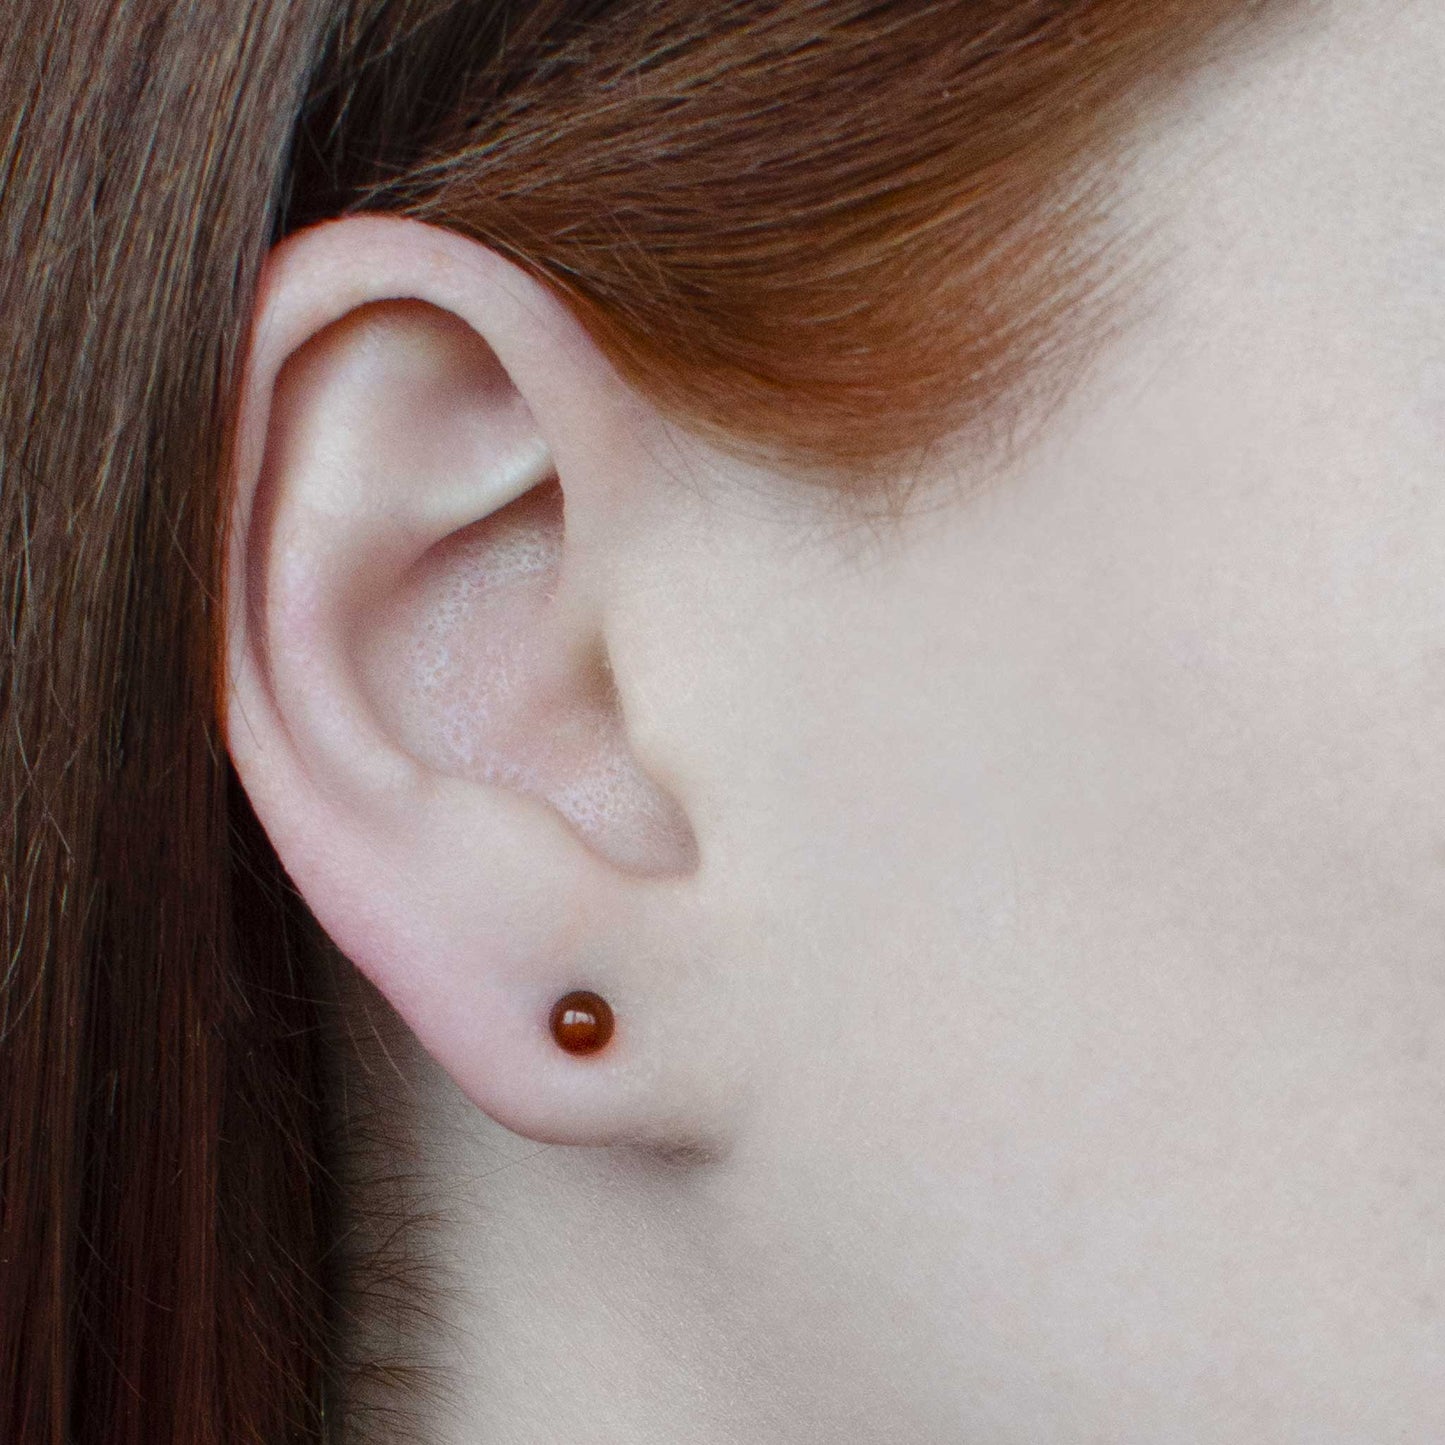 Woman wearing tiny Carnelian gemstone ball stud earring in earlobe